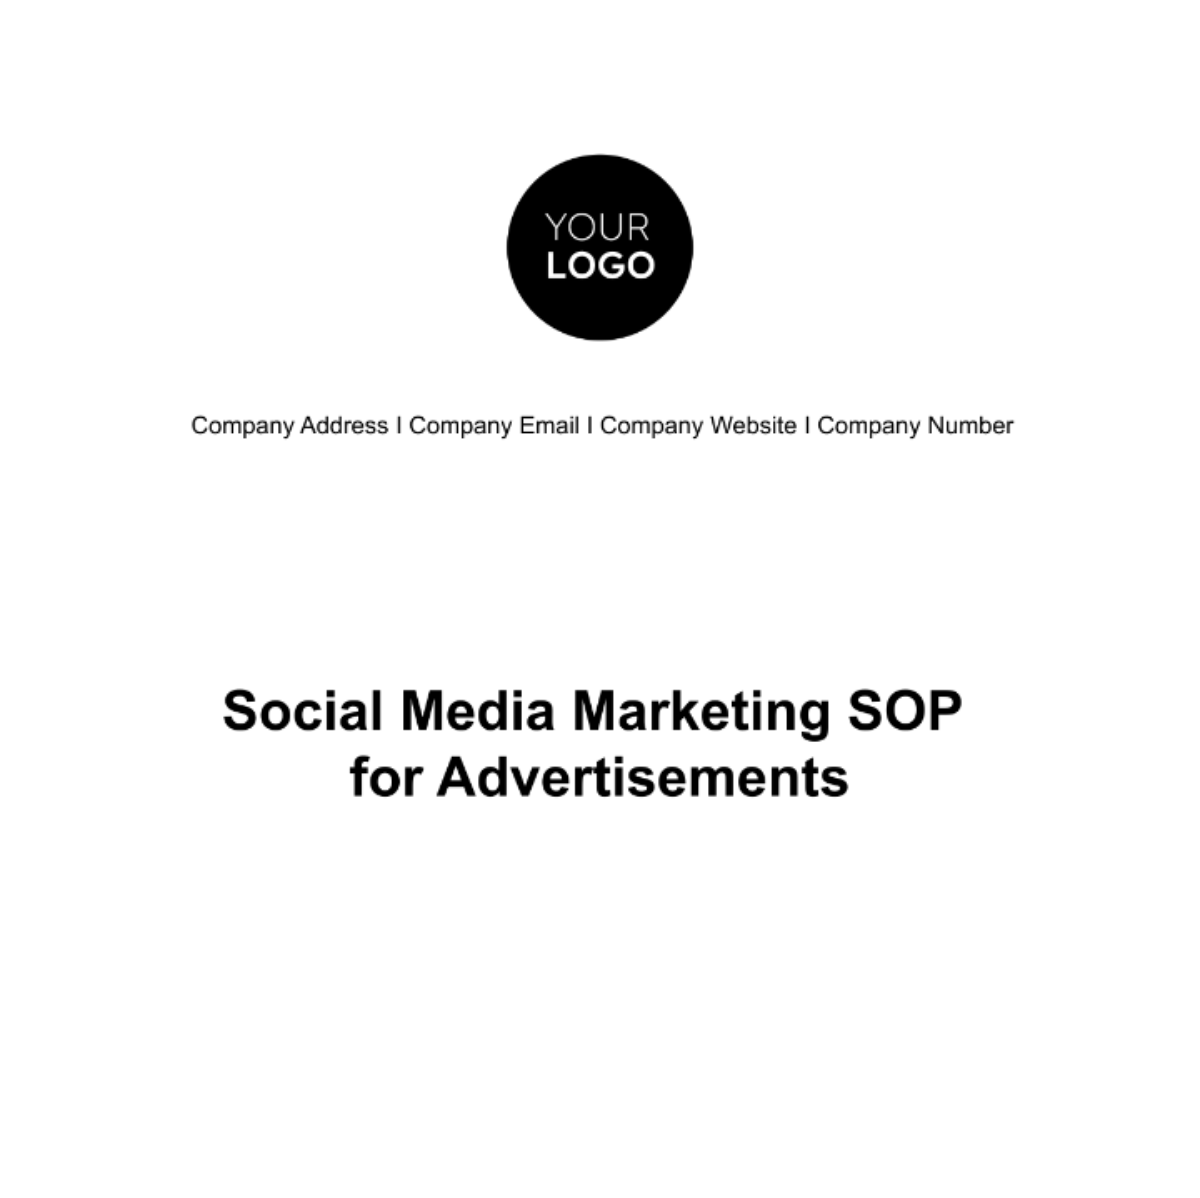 Social Media Marketing SOP for Advertisements Template